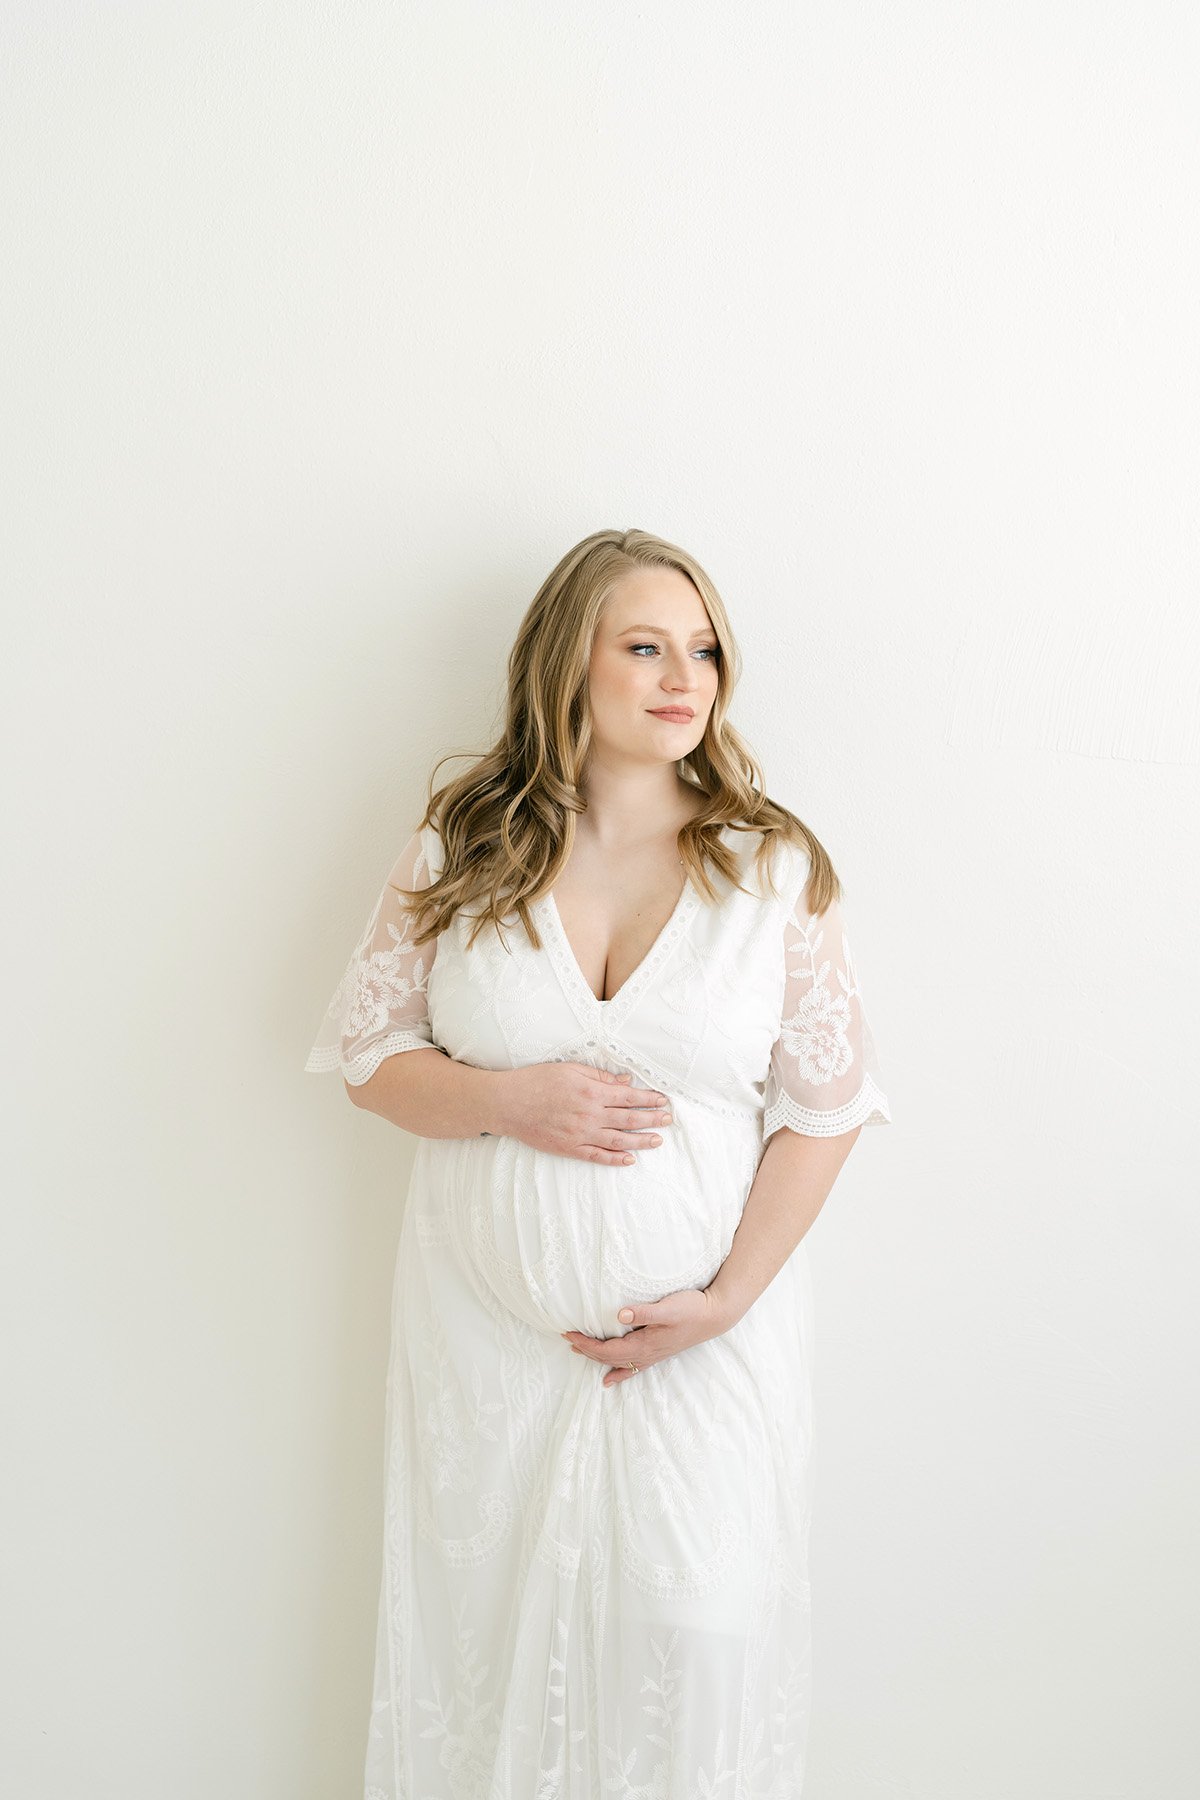 Louisville-KY-maternity-newborn-photographer